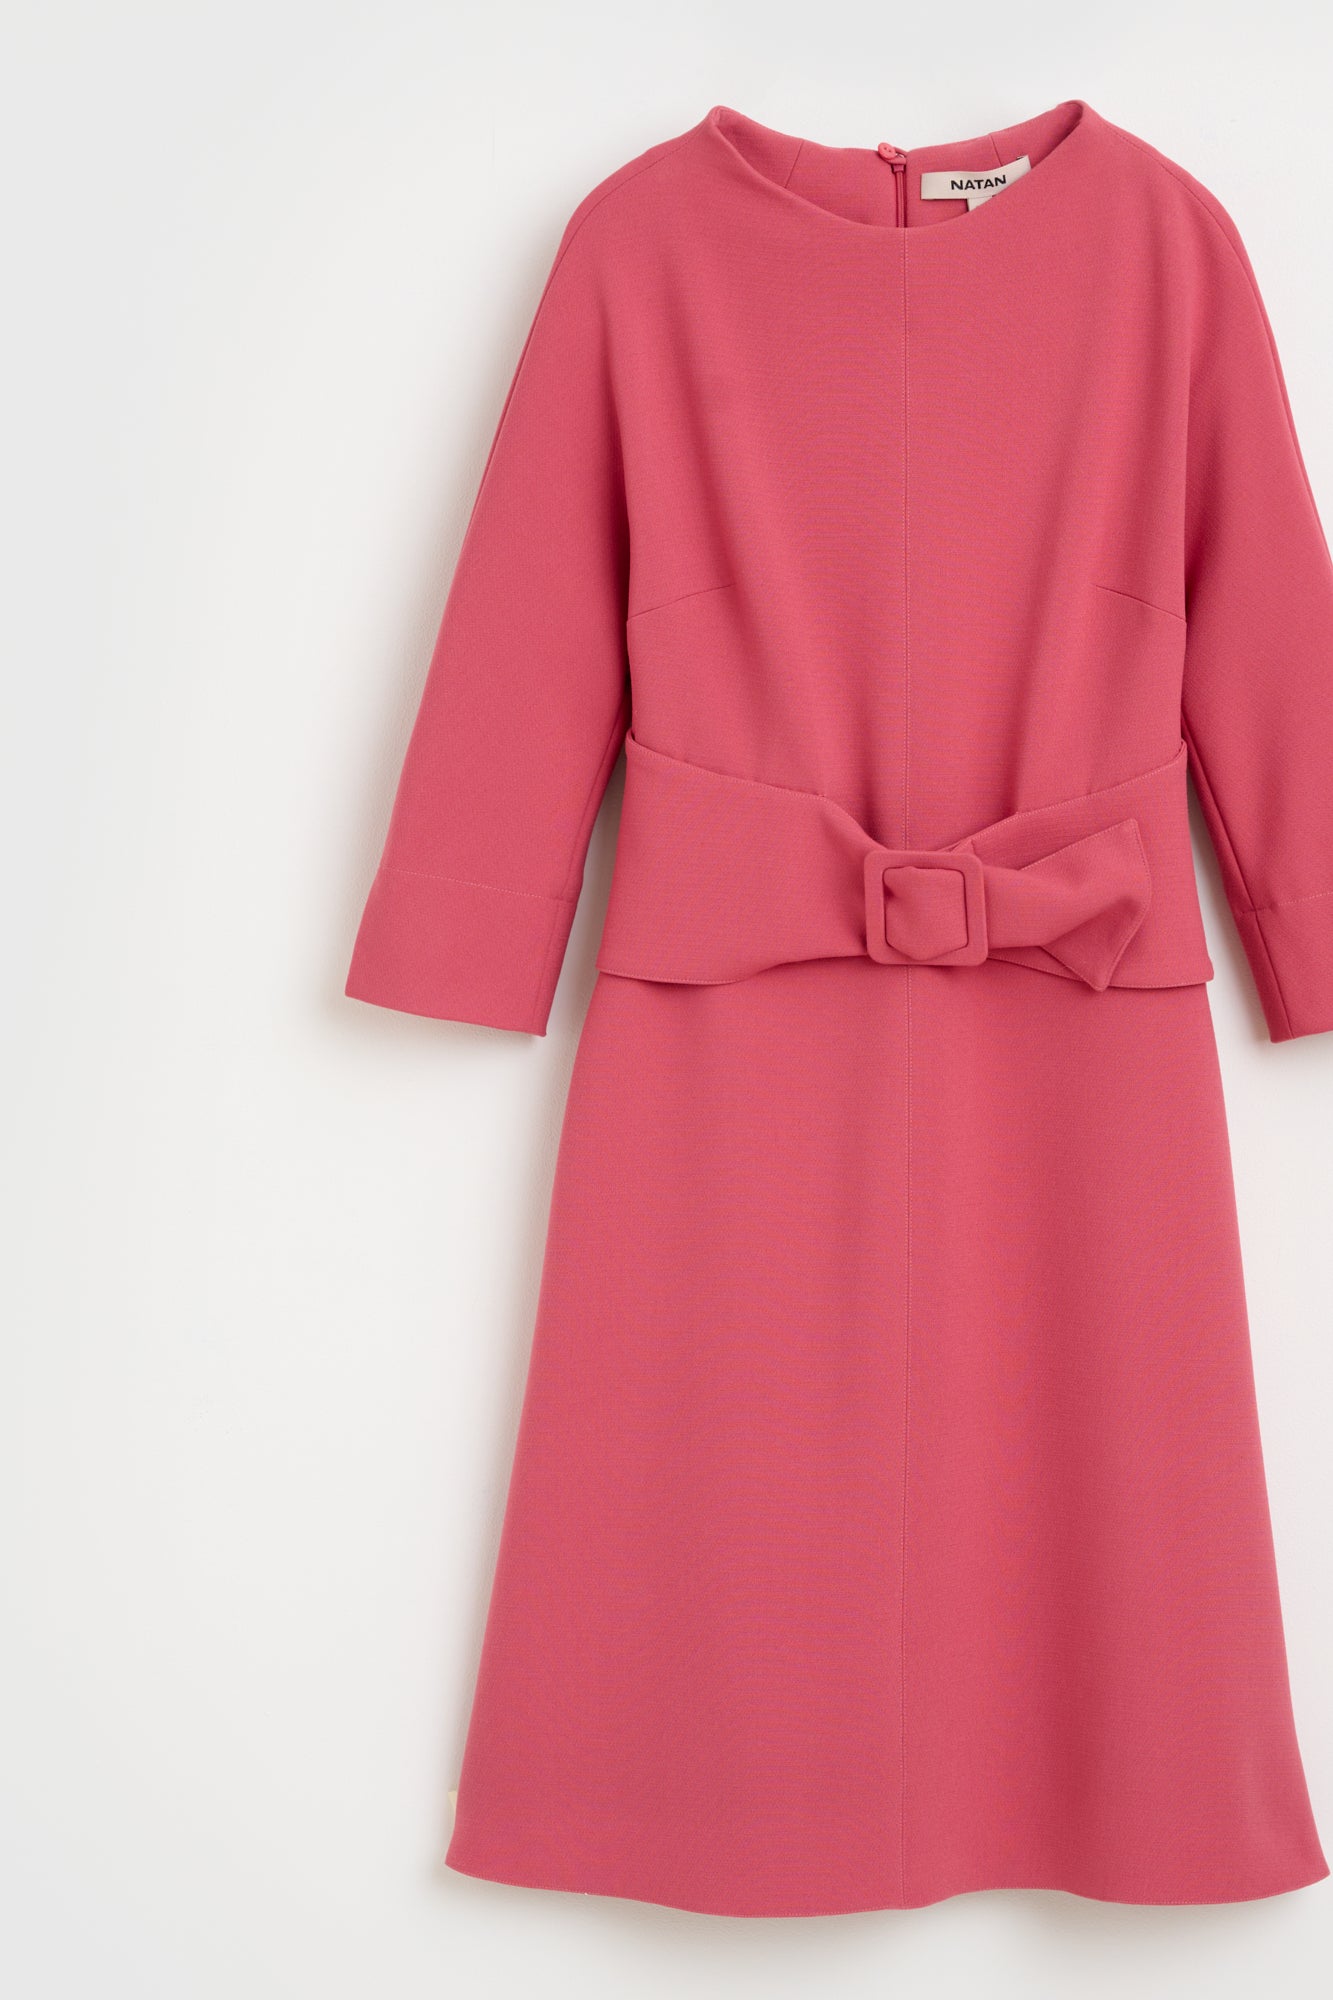 SAFRAN-N5DT01 – Dress | Natan Official website